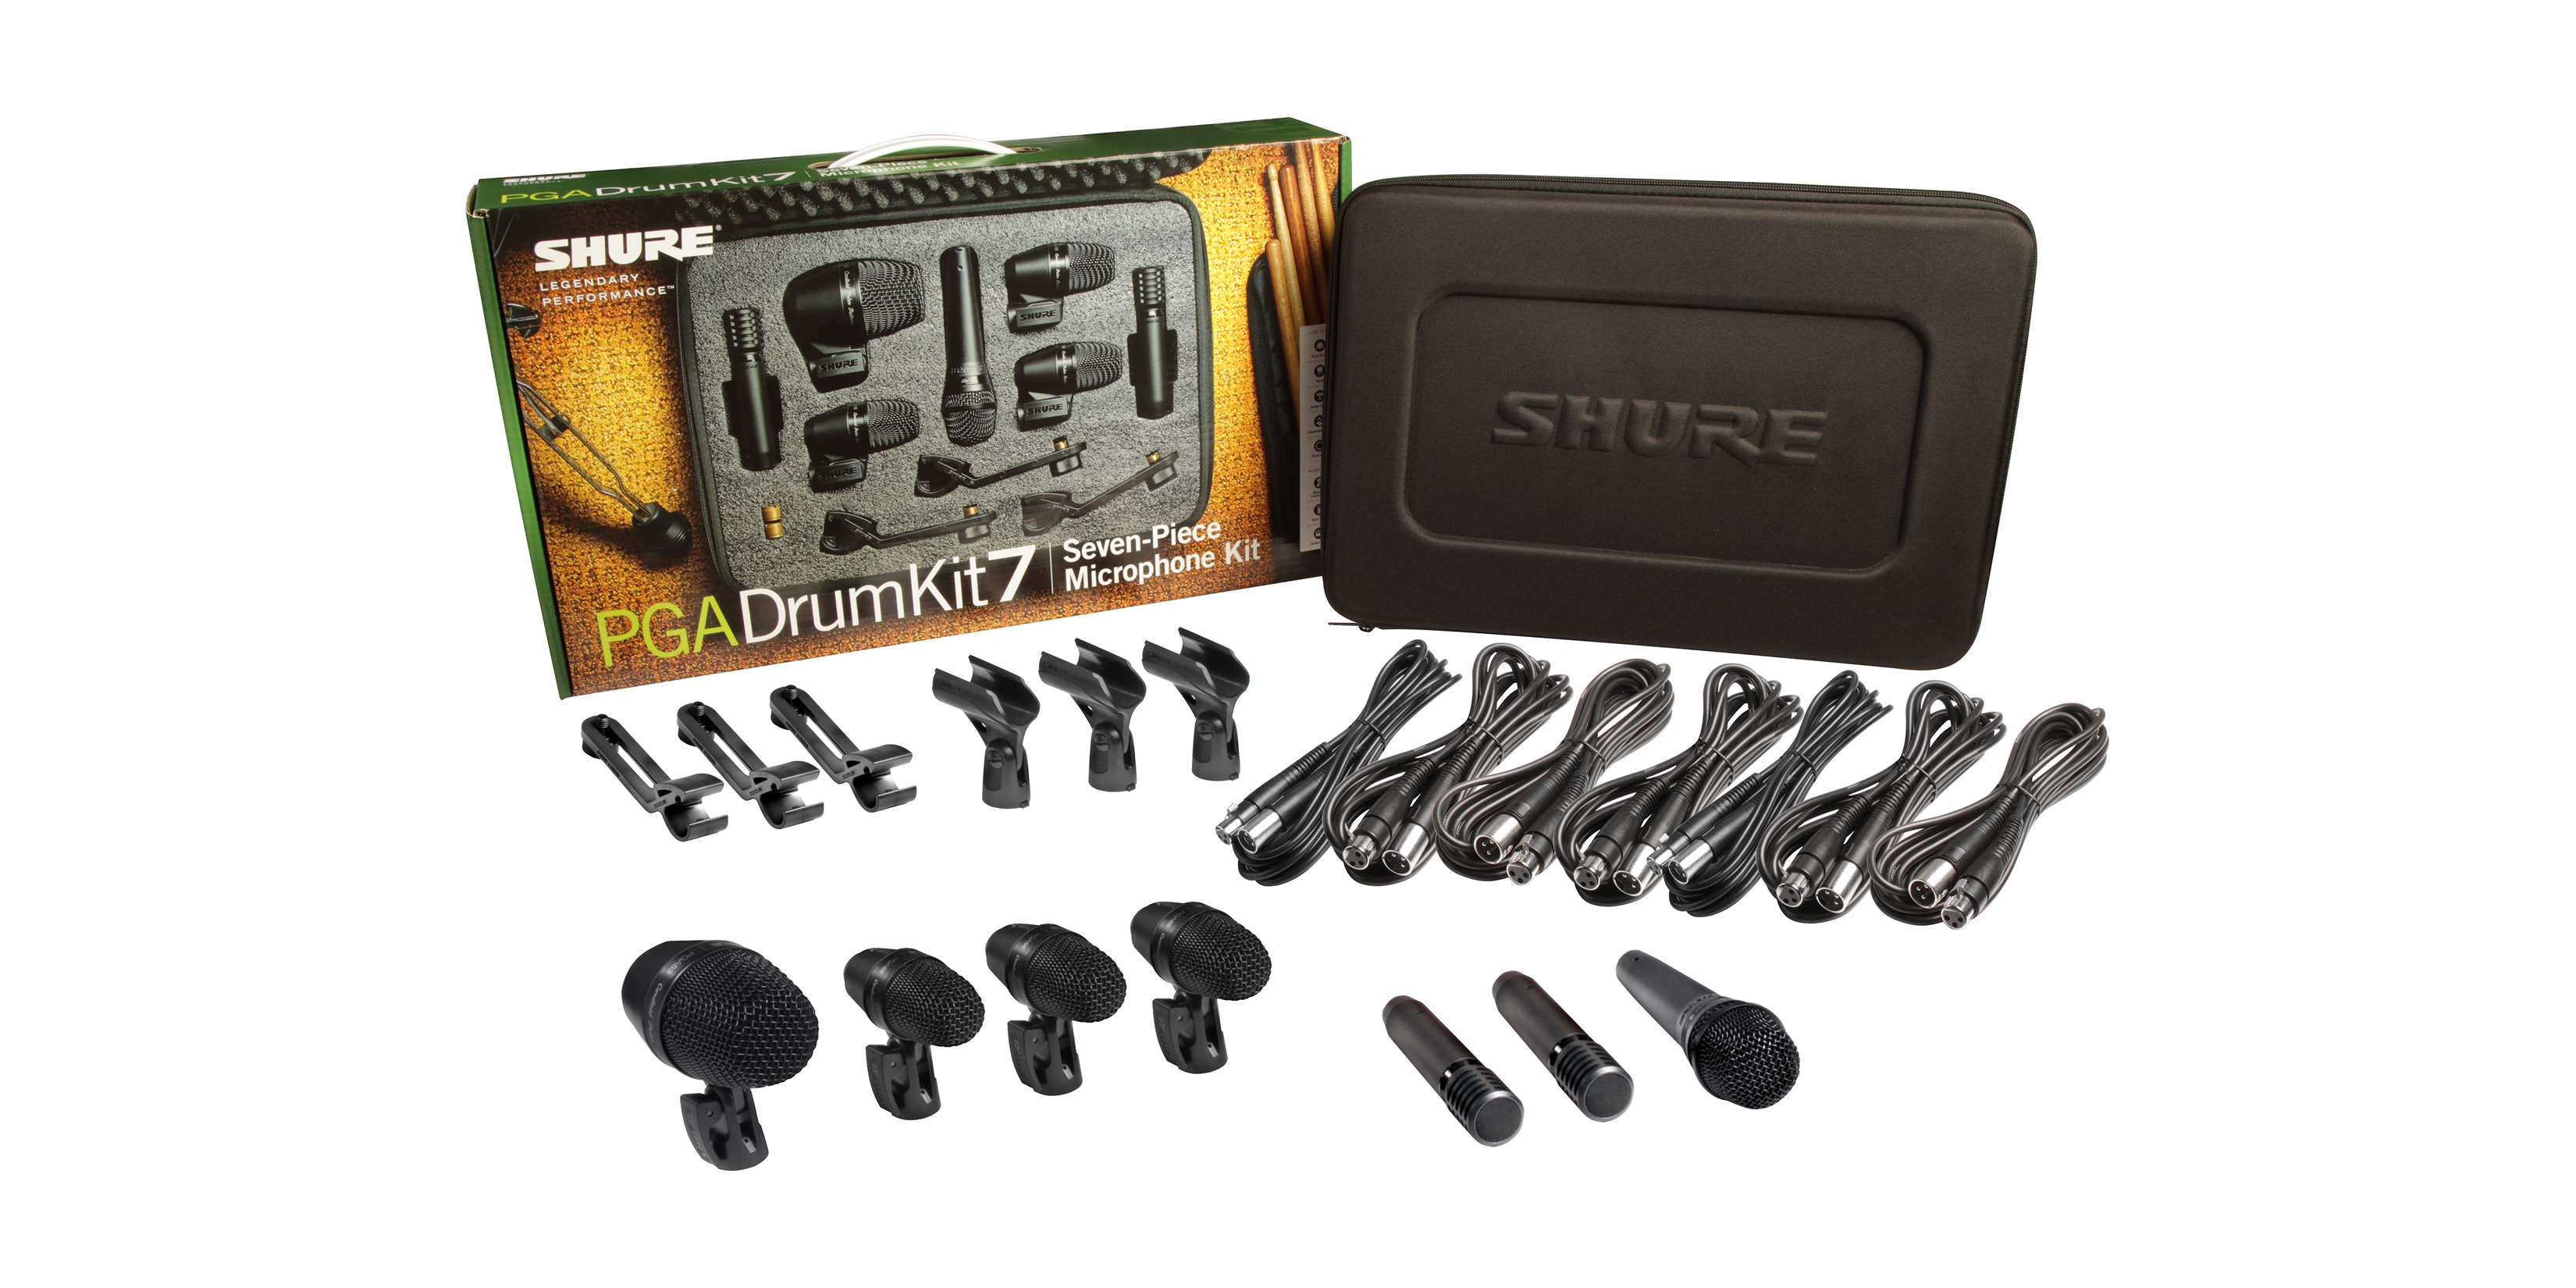 Shure Pga Drumkit 7 - Paire, Kit, Stereo Set Micros - Variation 2